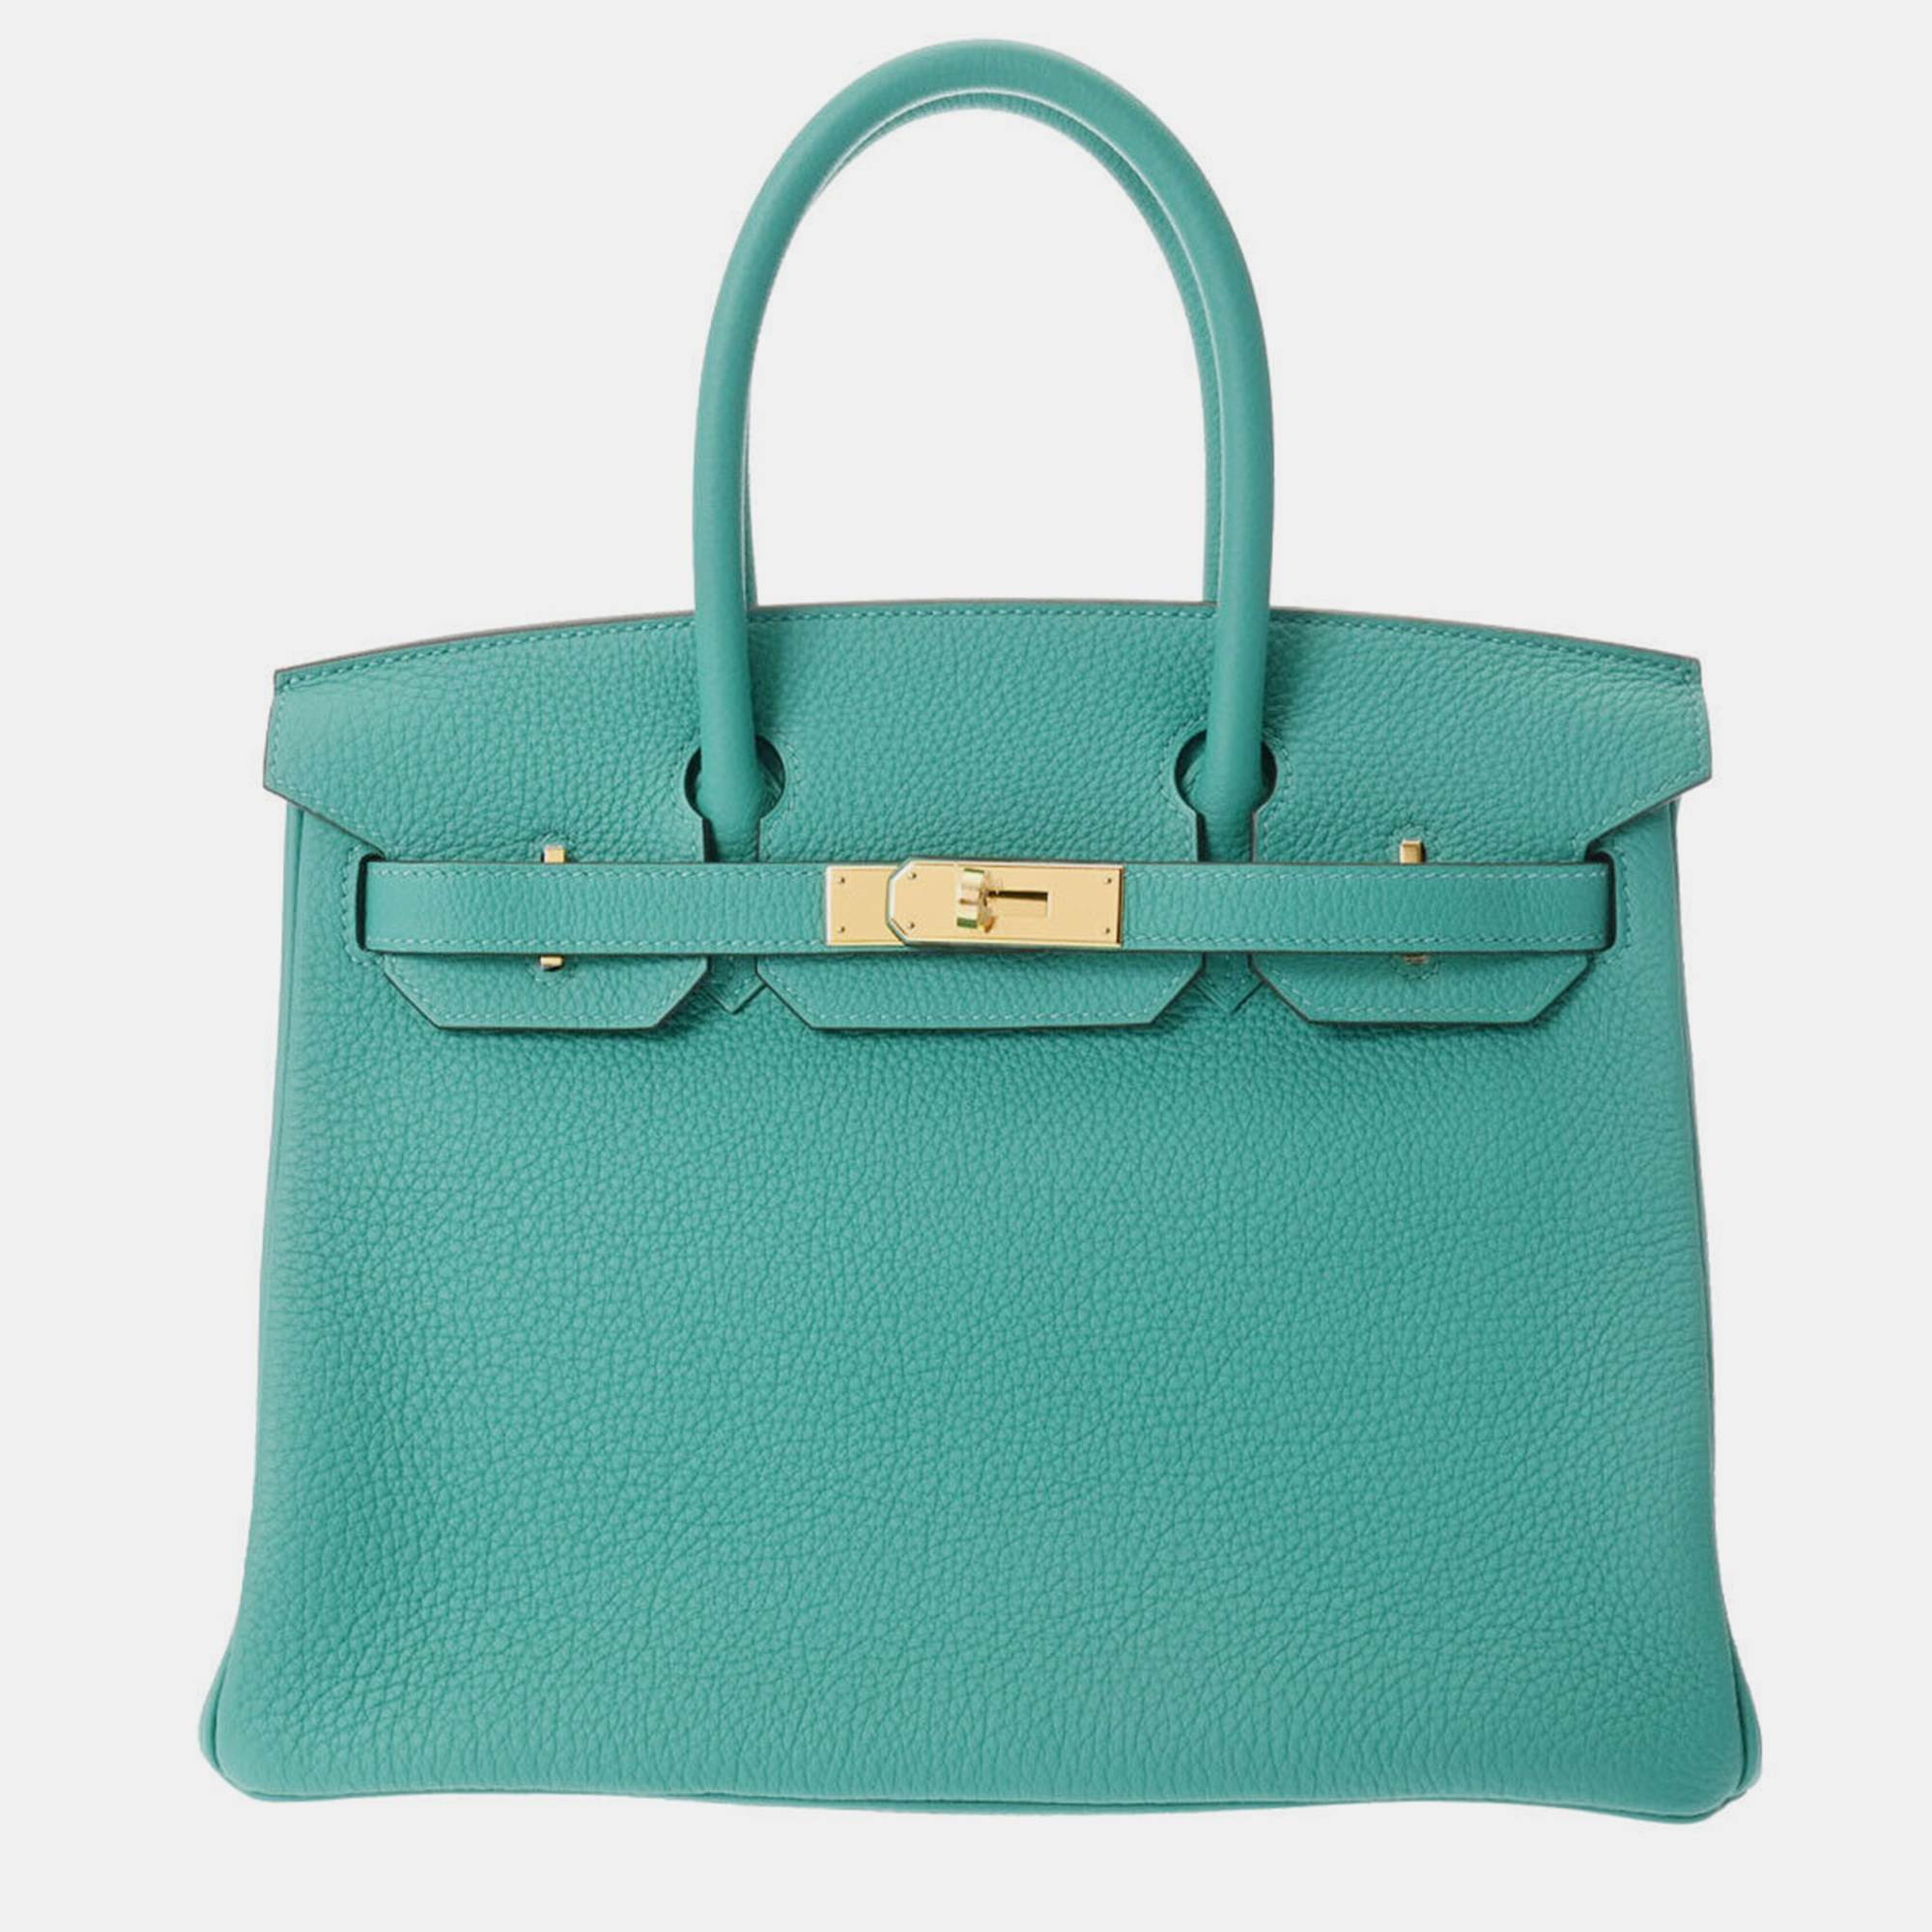 Hermes green togo leather birkin 30 handbag